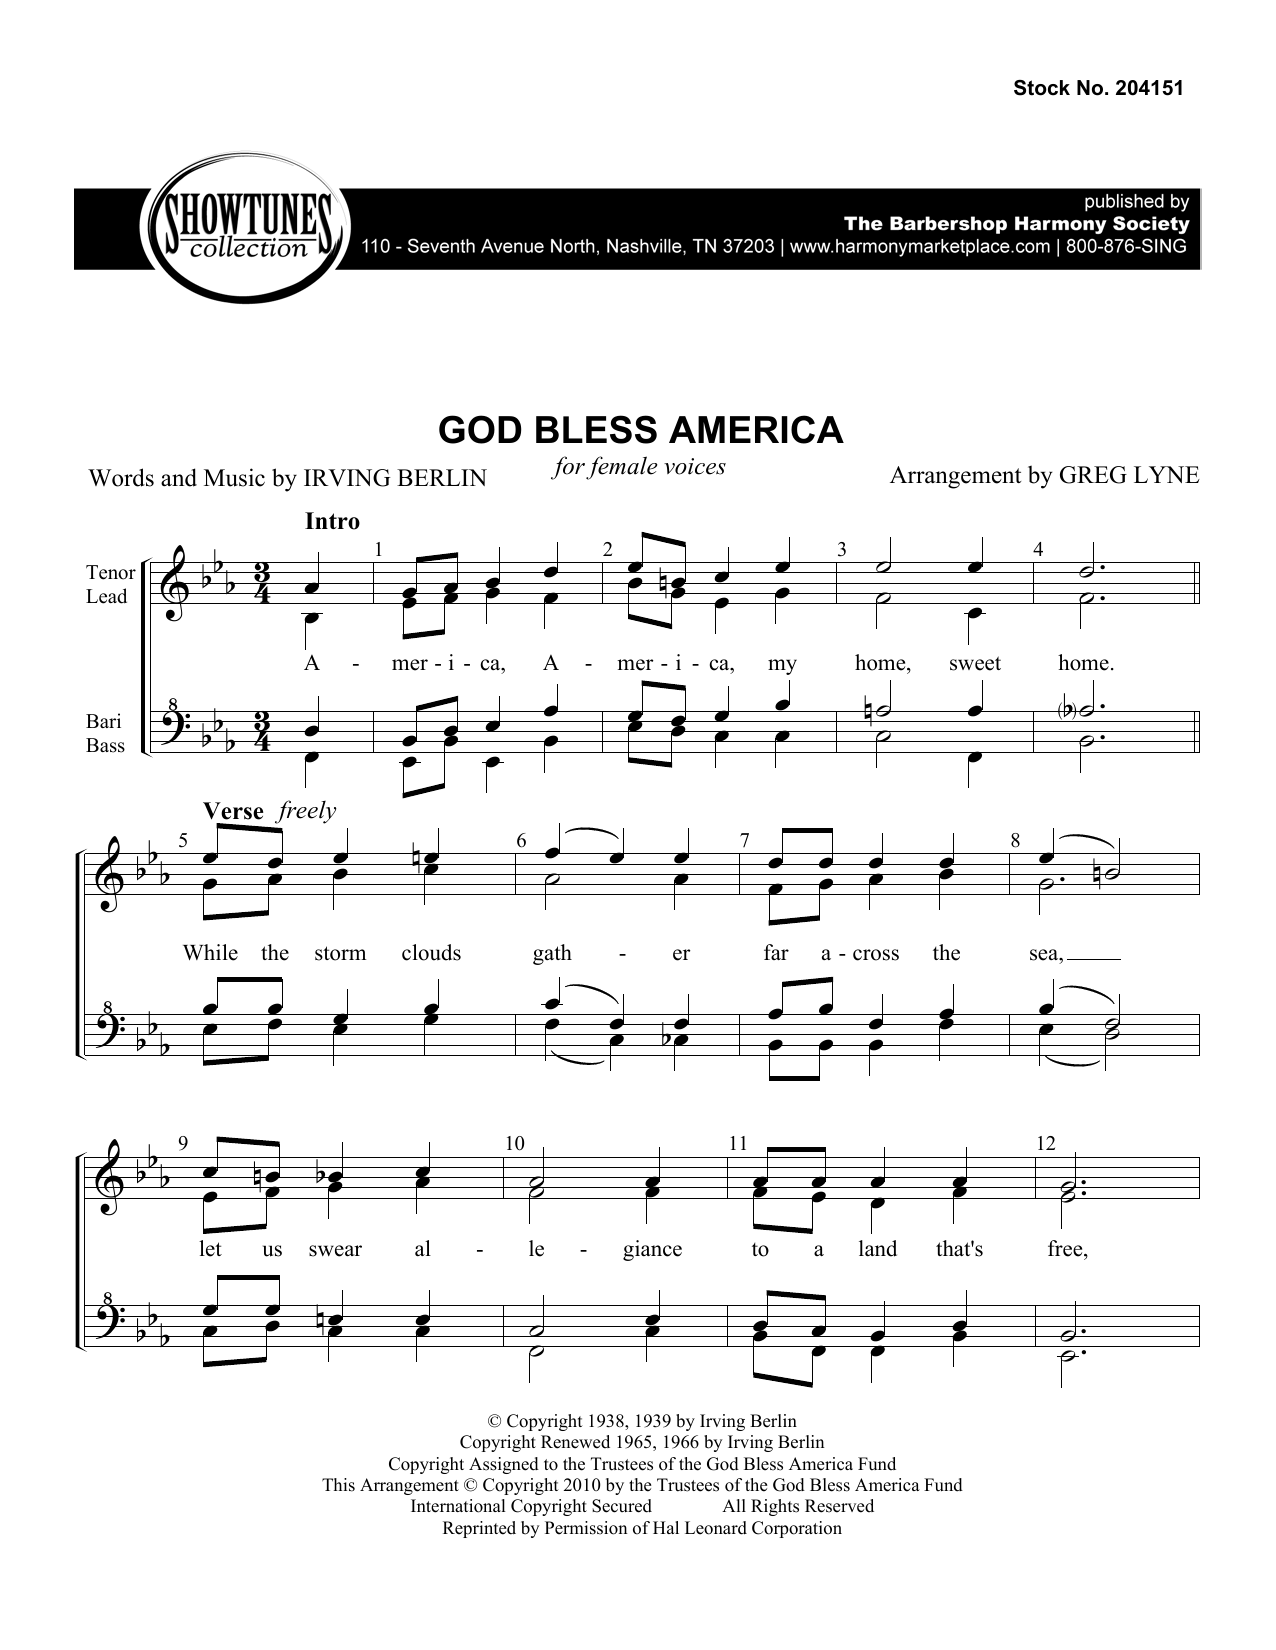 Irving Berlin God Bless America (arr. Greg Lyne) Sheet Music Notes & Chords for SSAA Choir - Download or Print PDF